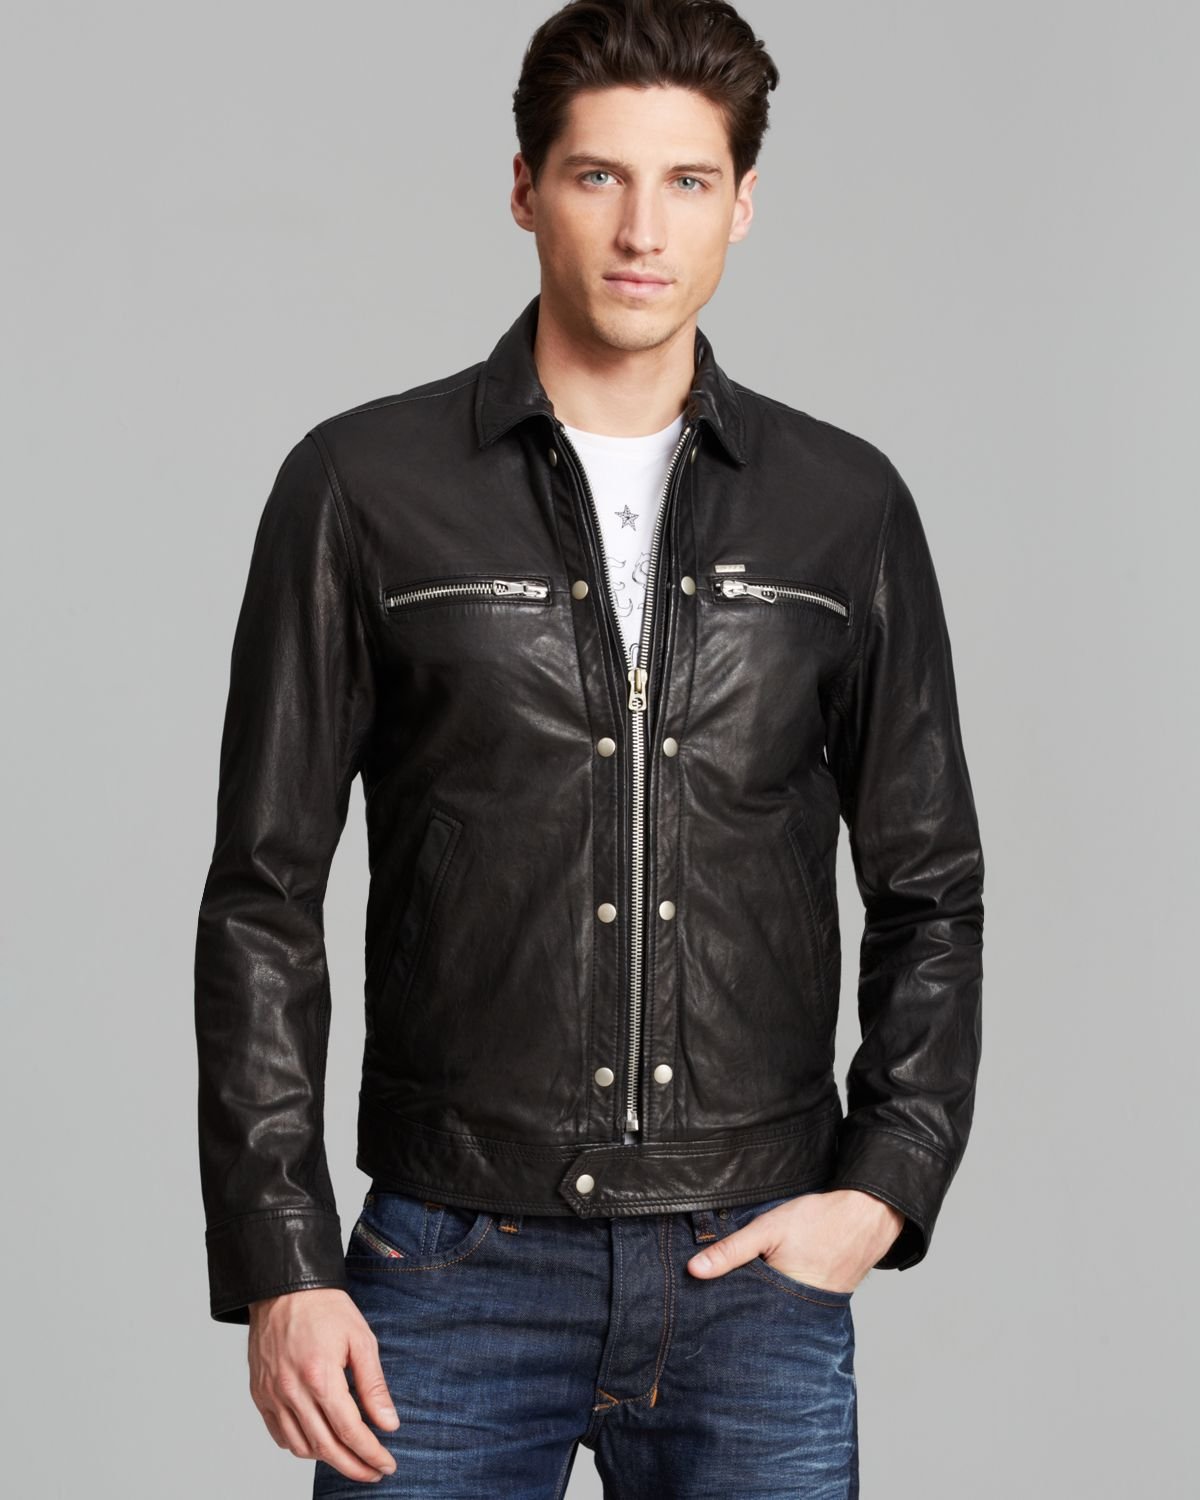 Lyst - Diesel Lbunmi Leather Jacket in Black for Men